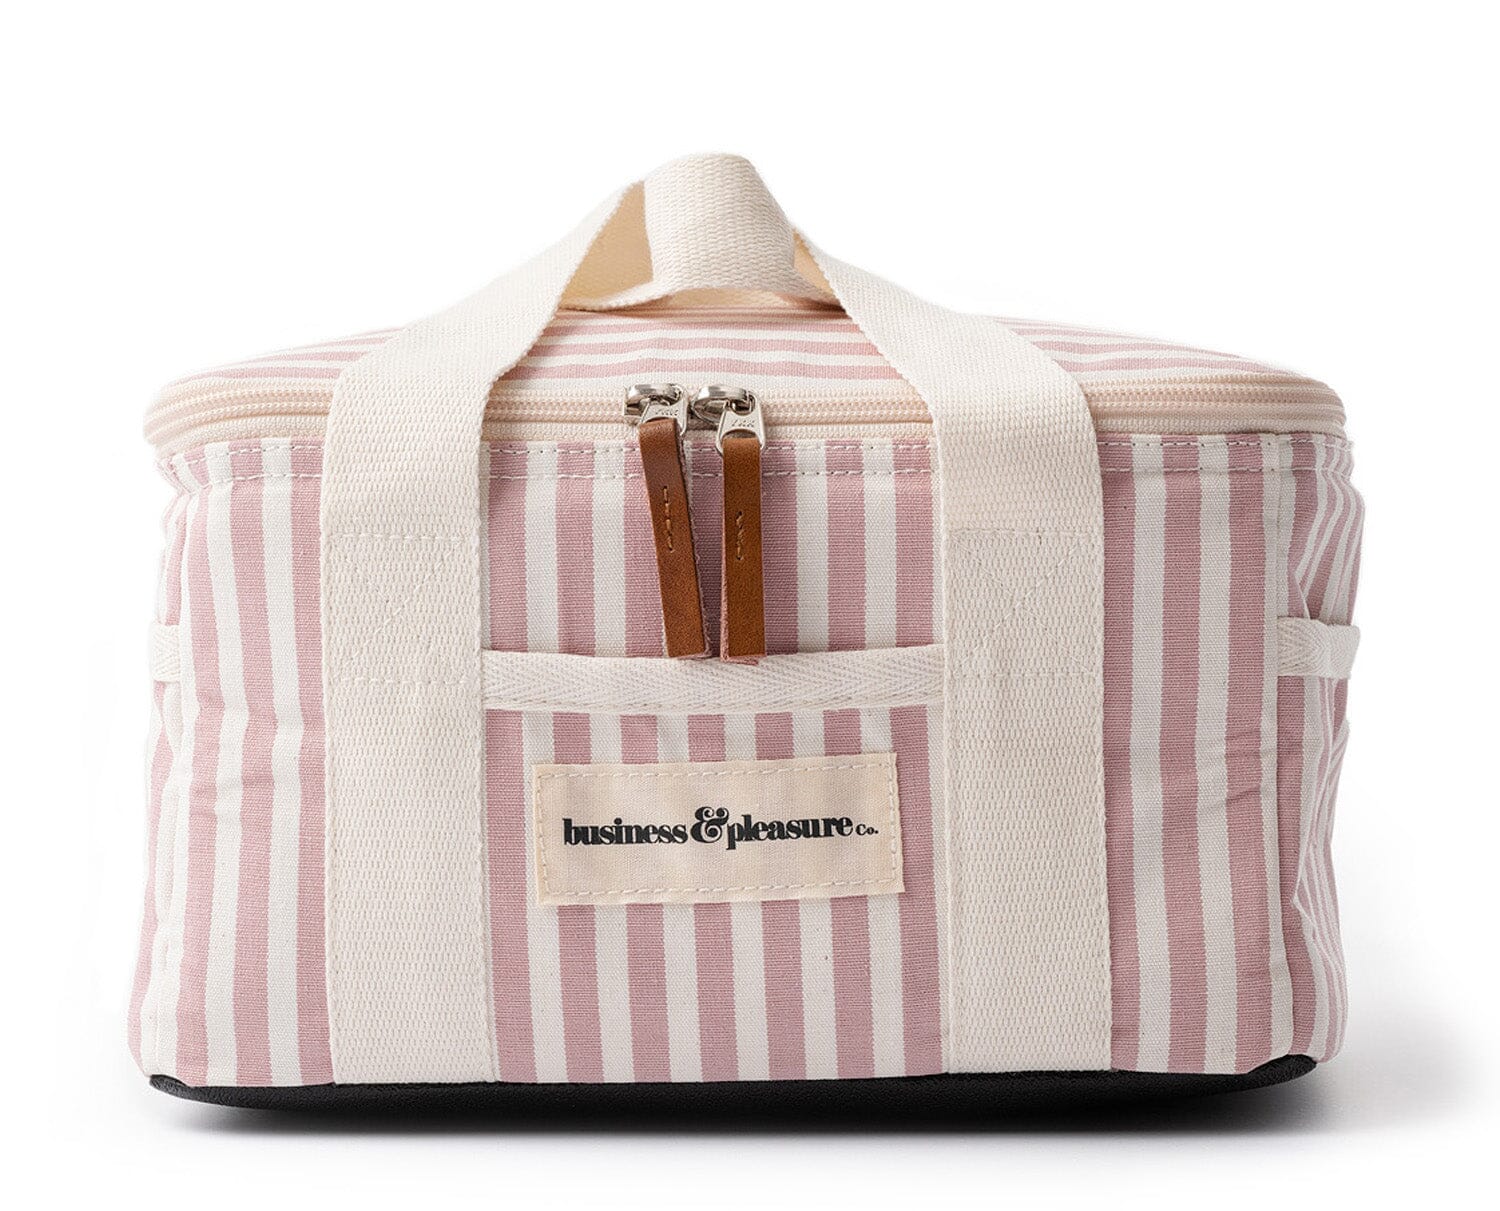 The Mini Cooler Bag - Lauren's Pink Stripe Mini Cooler Business & Pleasure Co 